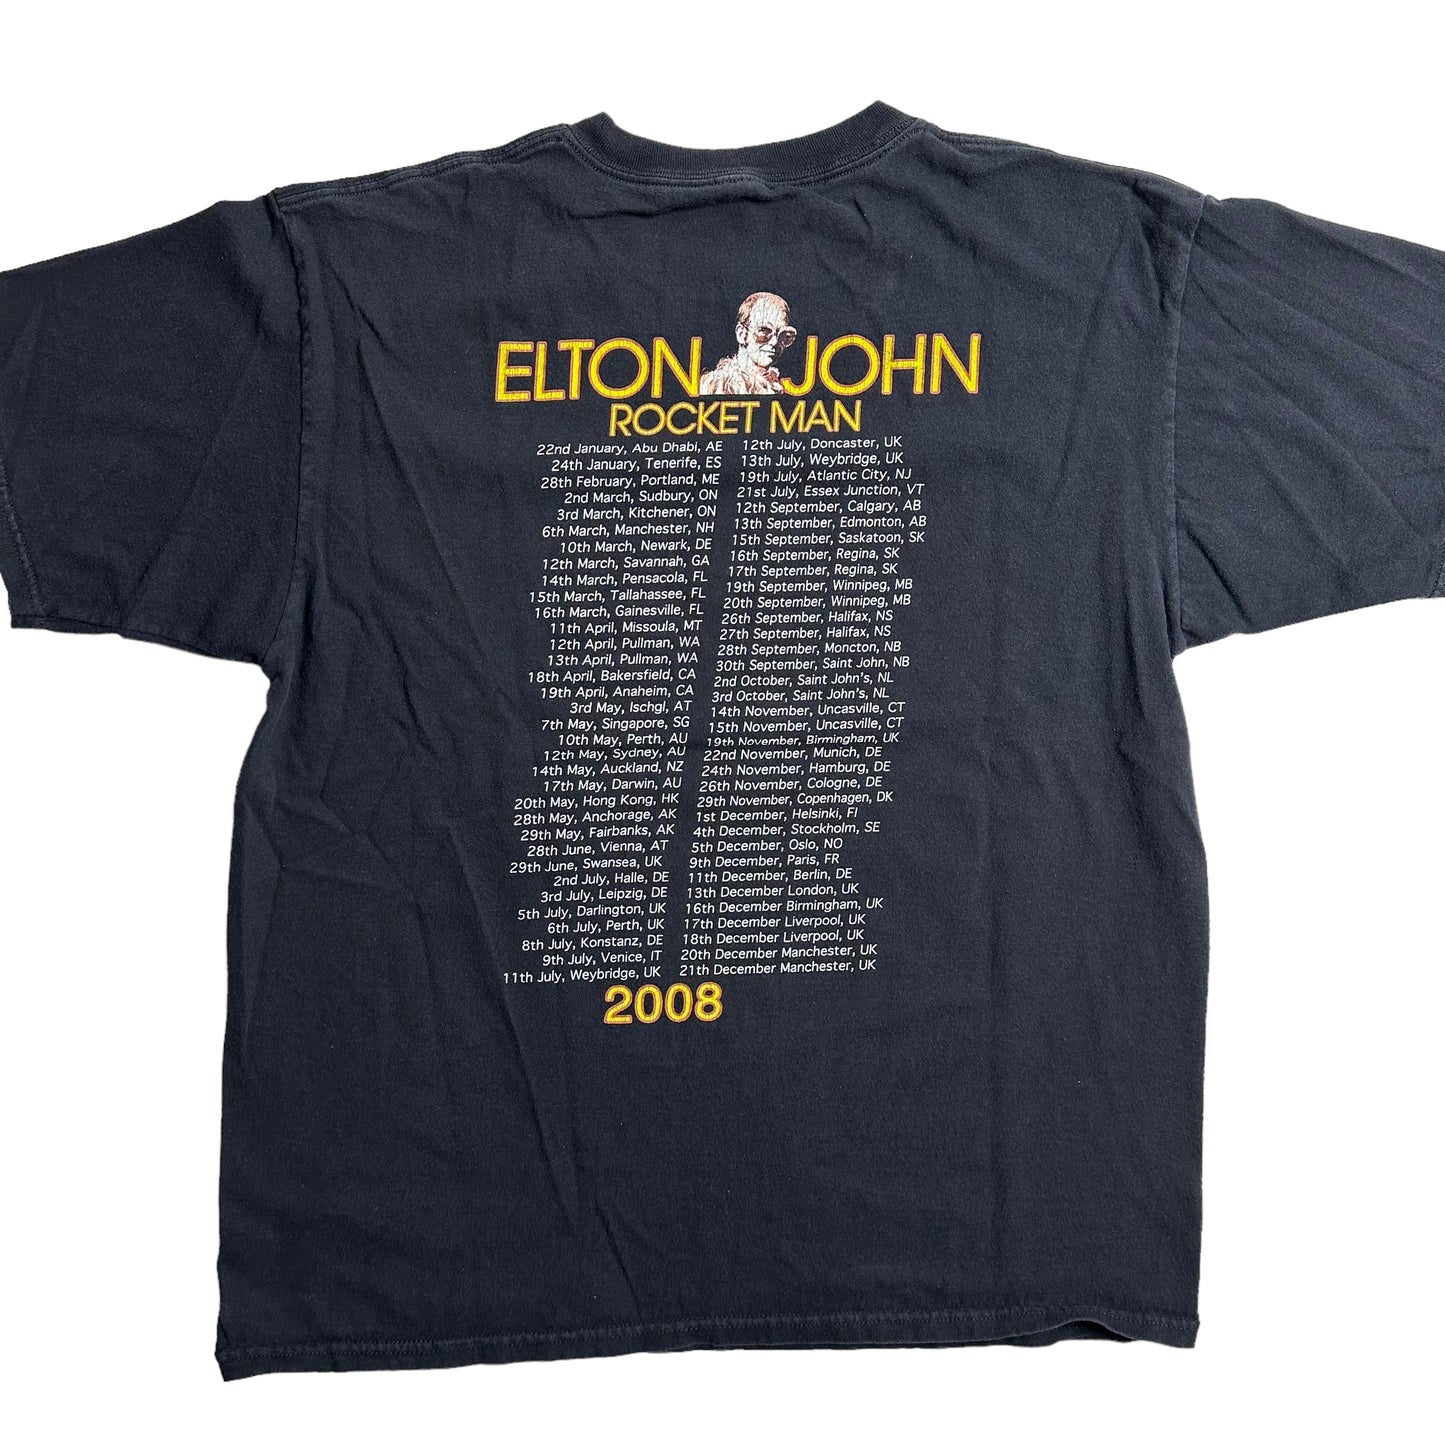 2007 Elton John Rocket Man Tour T-Shirt Sz XL (A1017)